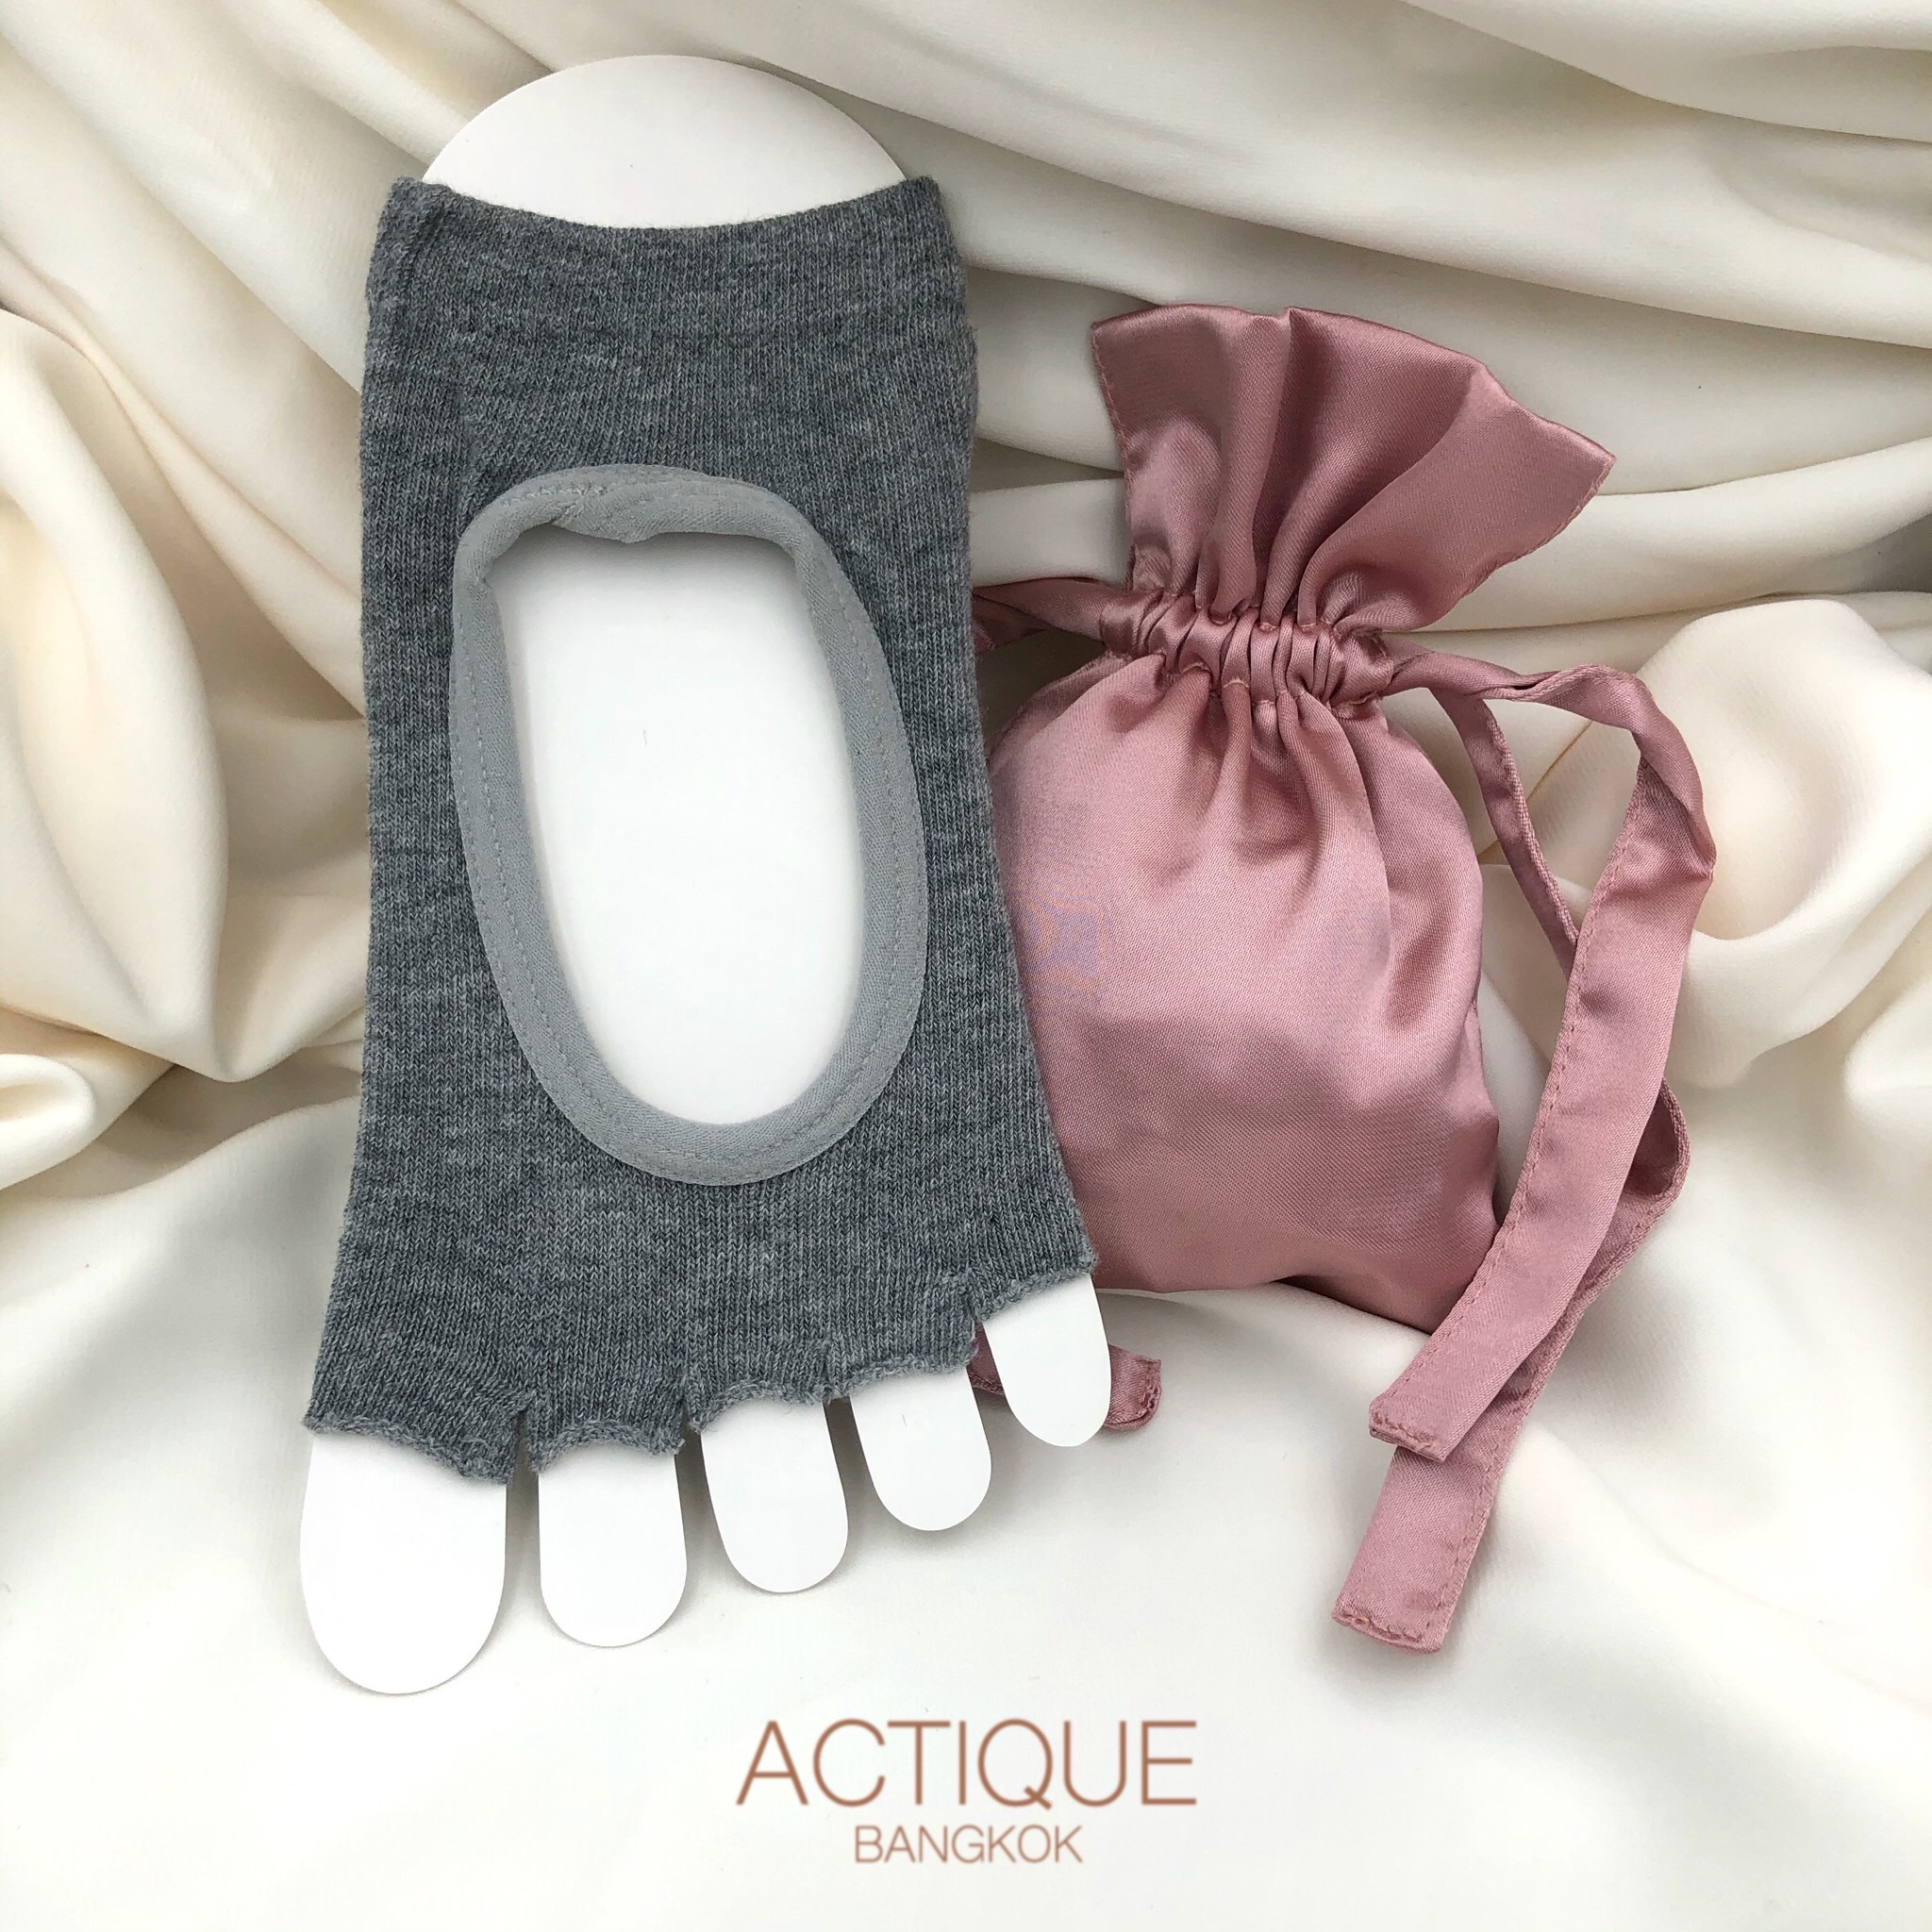 ACTIQUEBKK - Baby Luka yoga and pilates socks ถุงเท้าพิลาทิส โยคะ มีกันลื่น